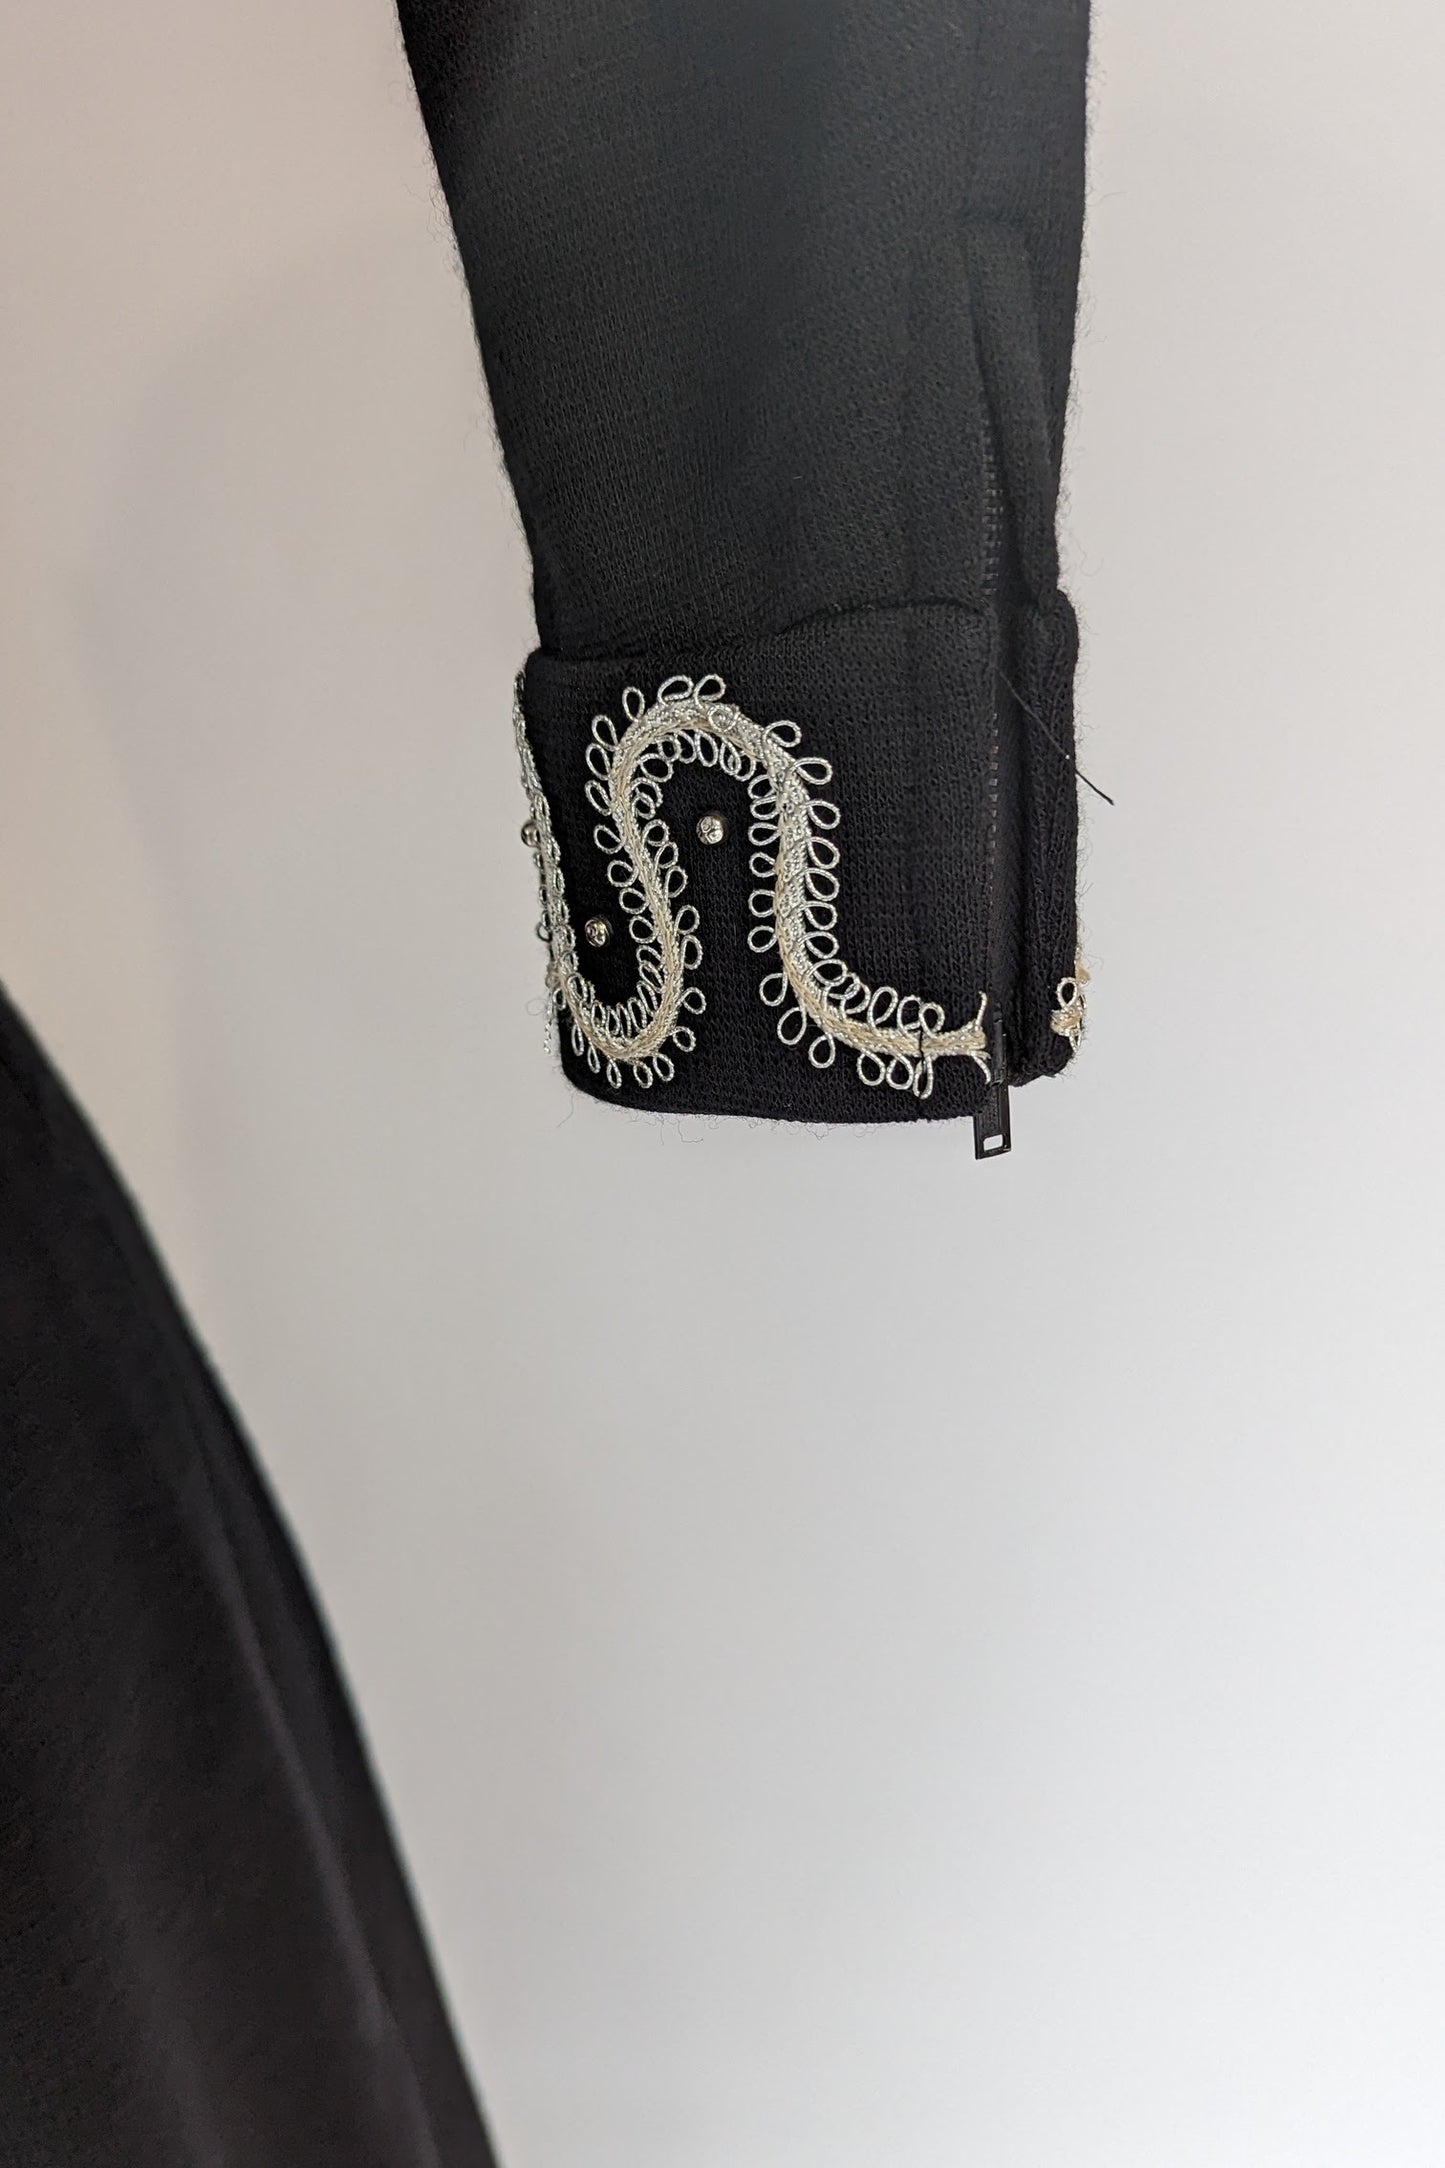 Zip cuffs on Jean Varon dress